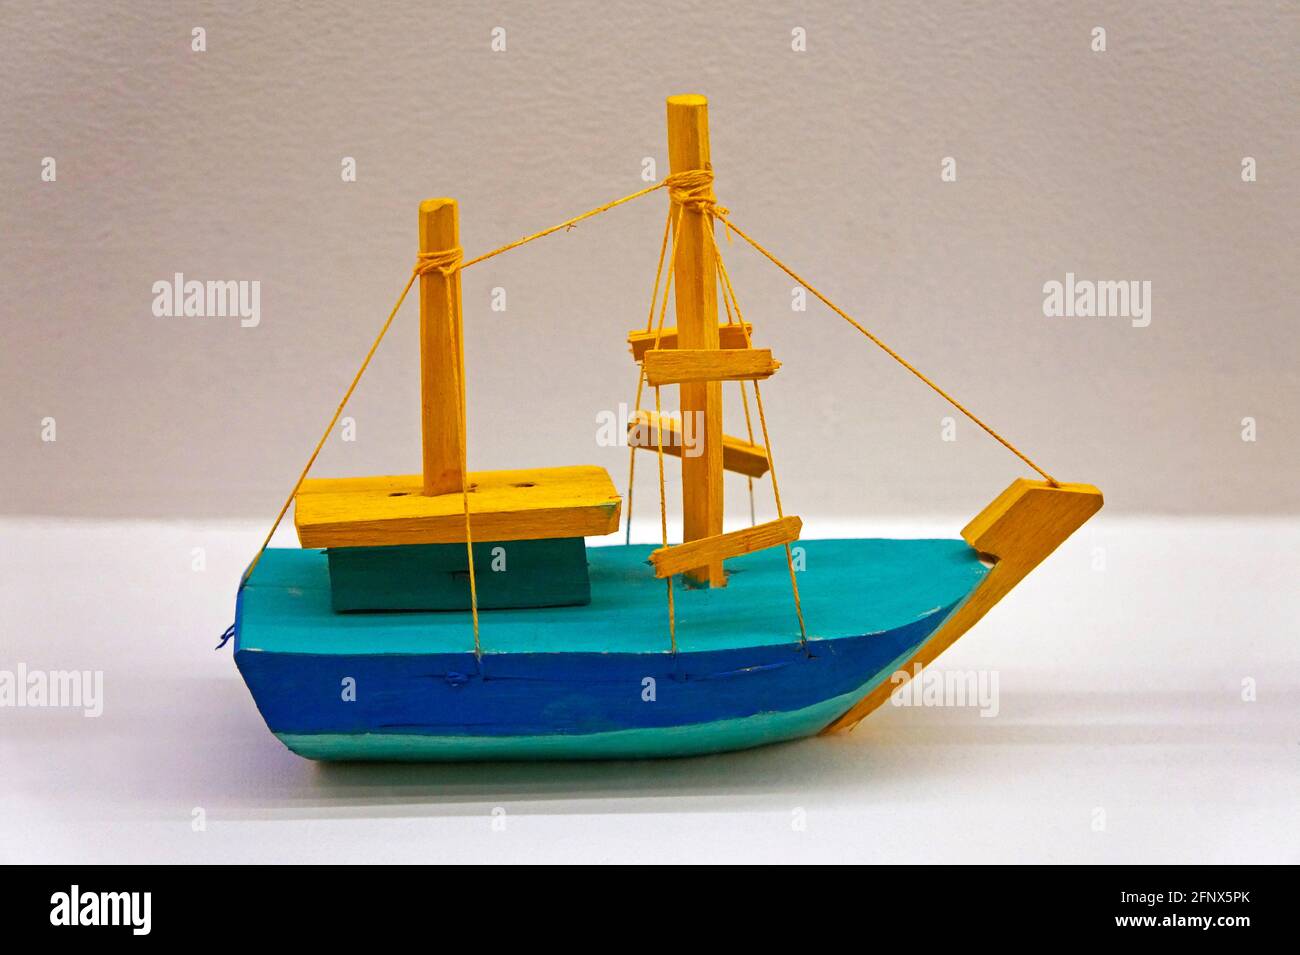 Barco de juguete de madera fotografías e imágenes de alta resolución - Alamy